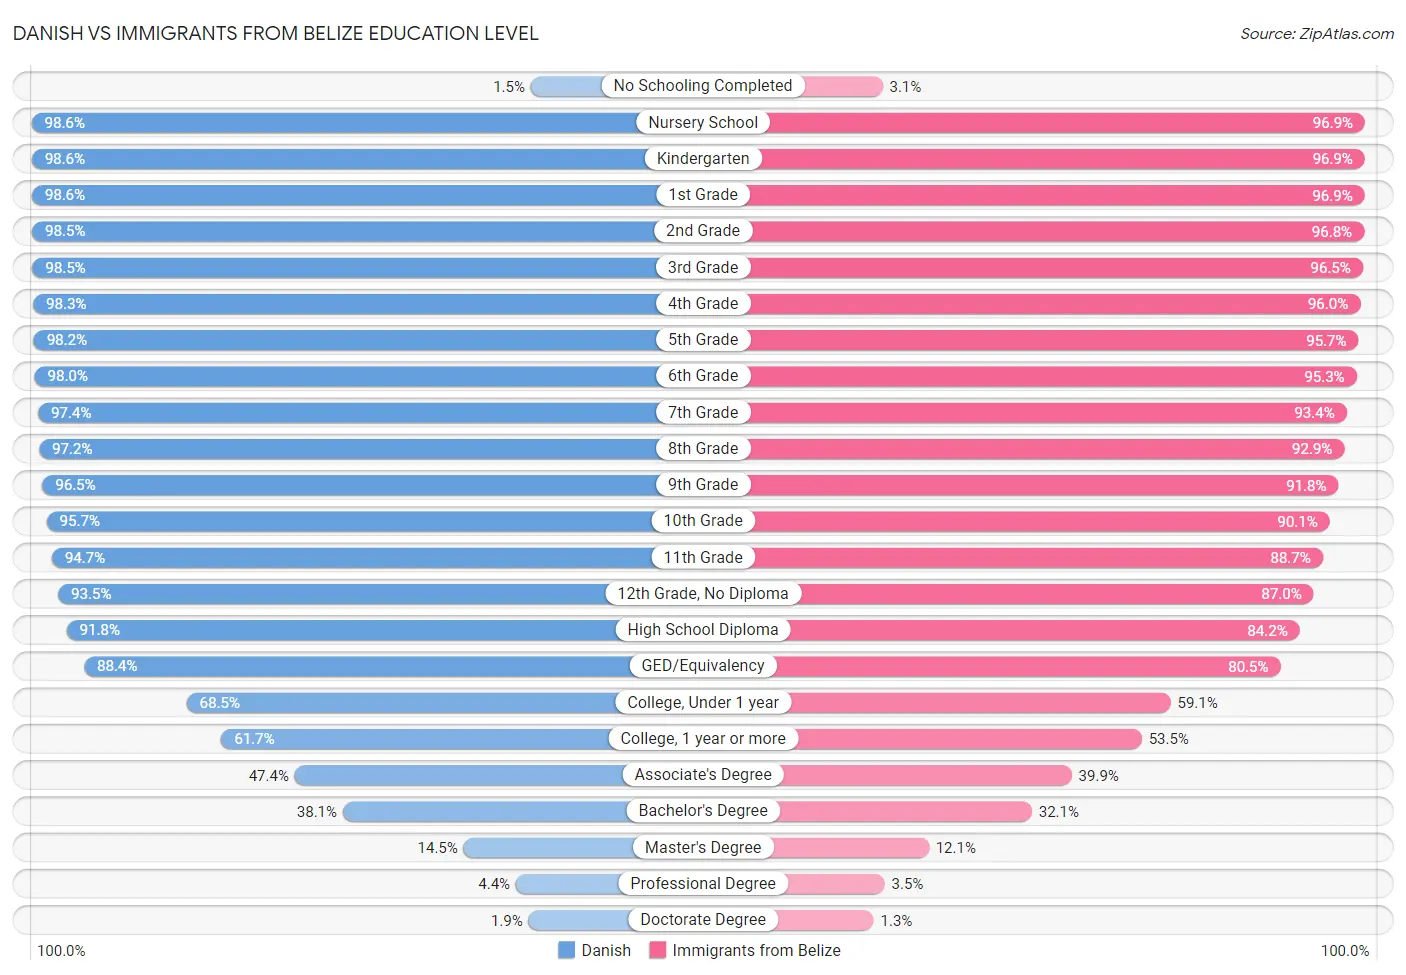 Danish vs Immigrants from Belize Education Level